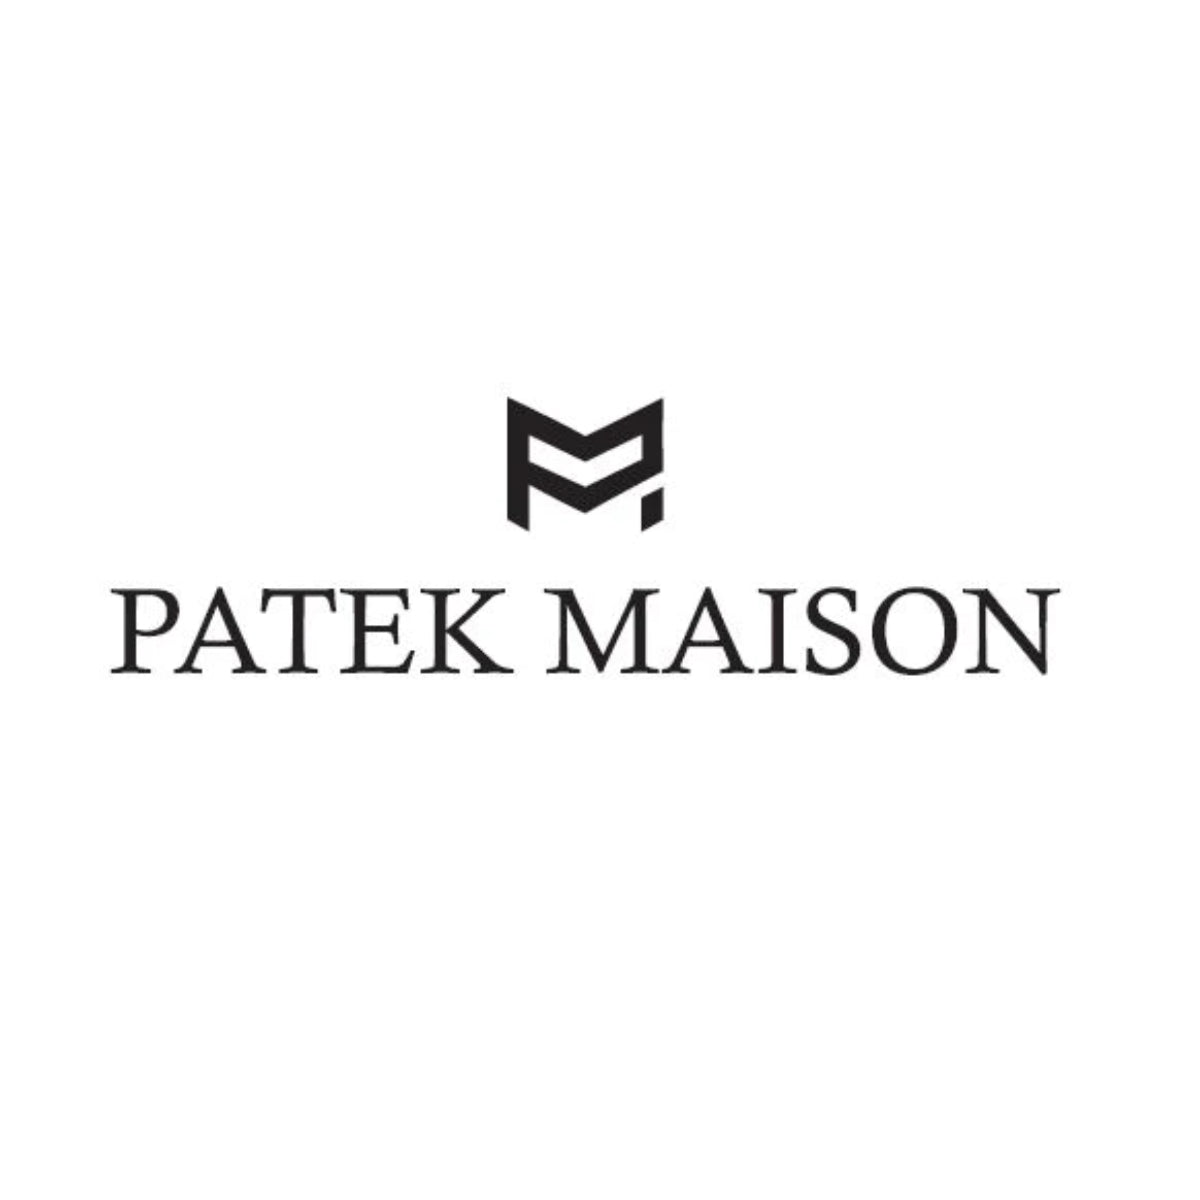 PATEK MAISON | Fragancias Colombia